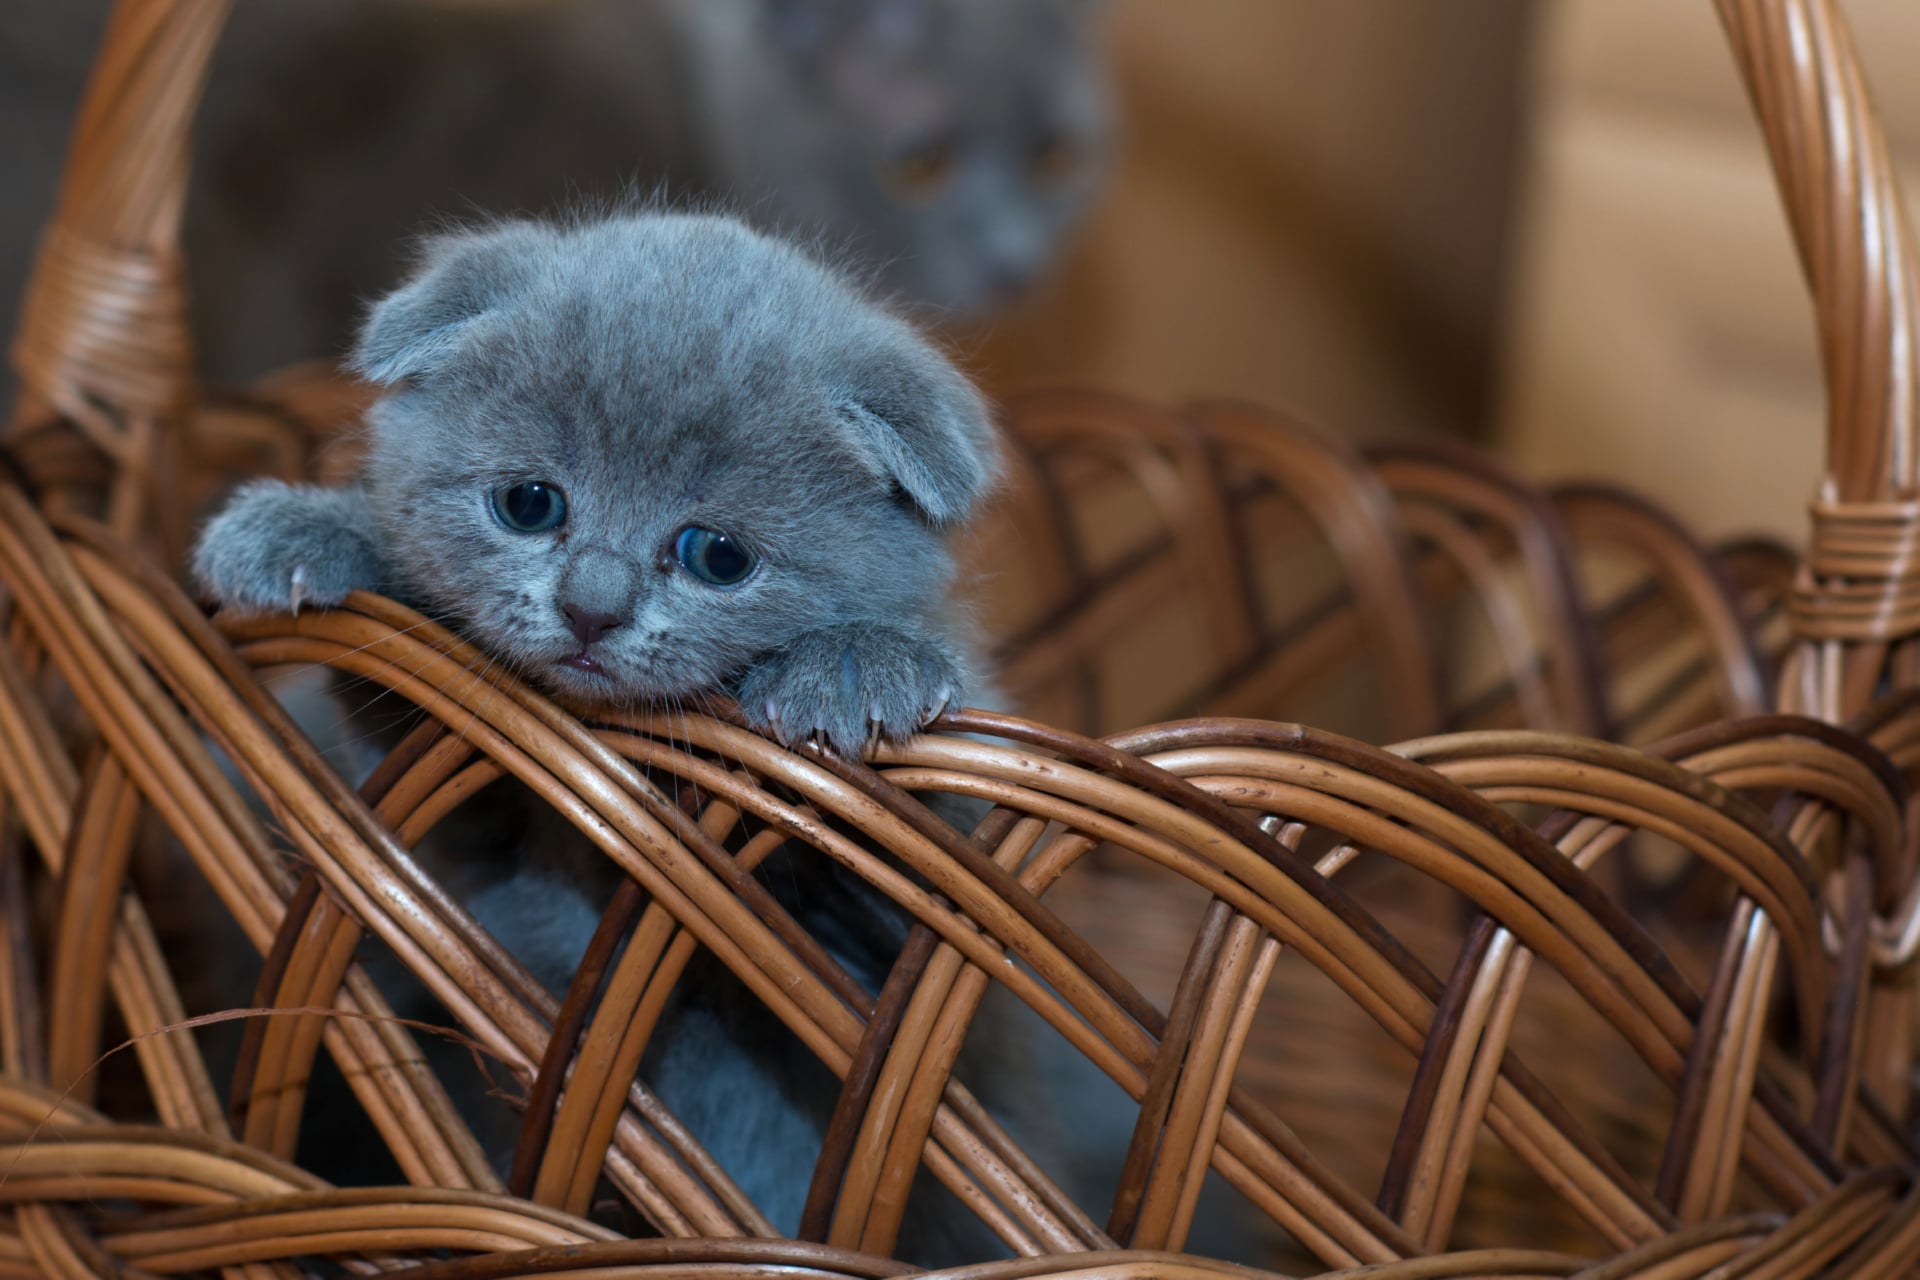 Russian Blue Kitten at 1024 x 1024 iPad size wallpapers HD quality